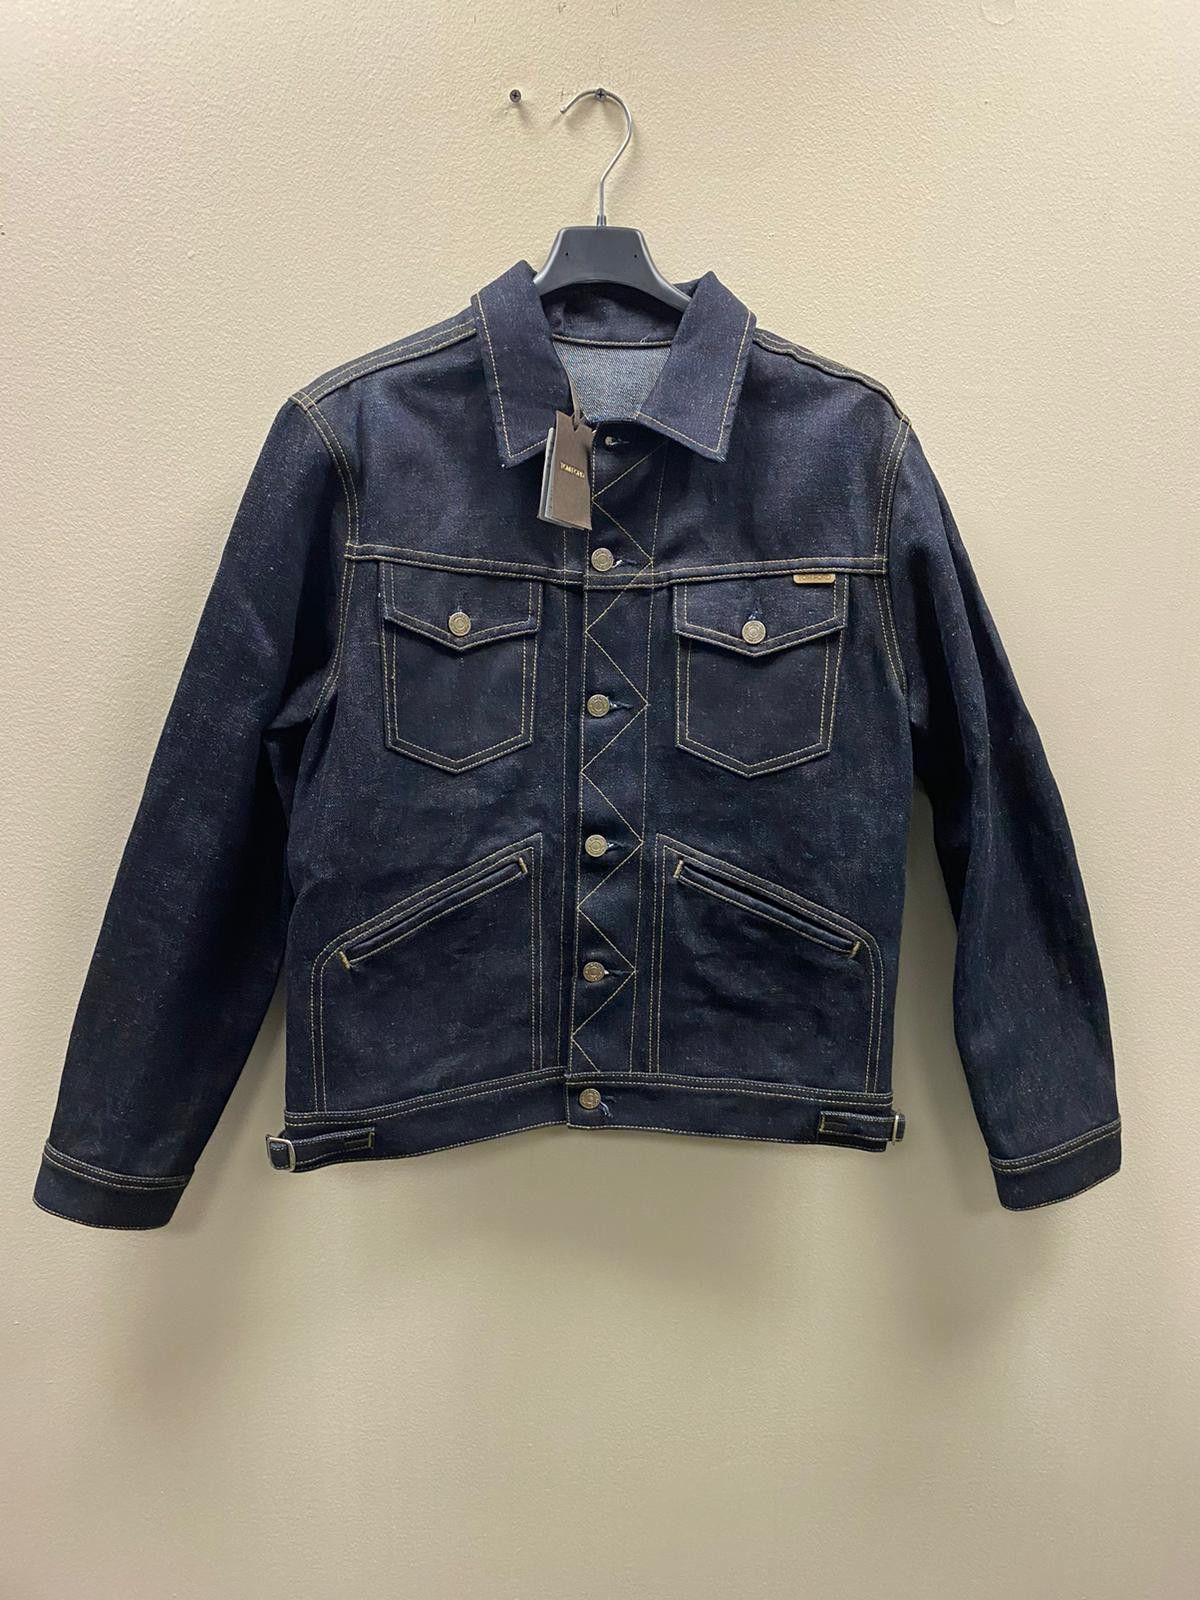 Tom Ford Classic Denim Jacket in Indigo Size US M / EU 48-50 / 2 - 3 Thumbnail